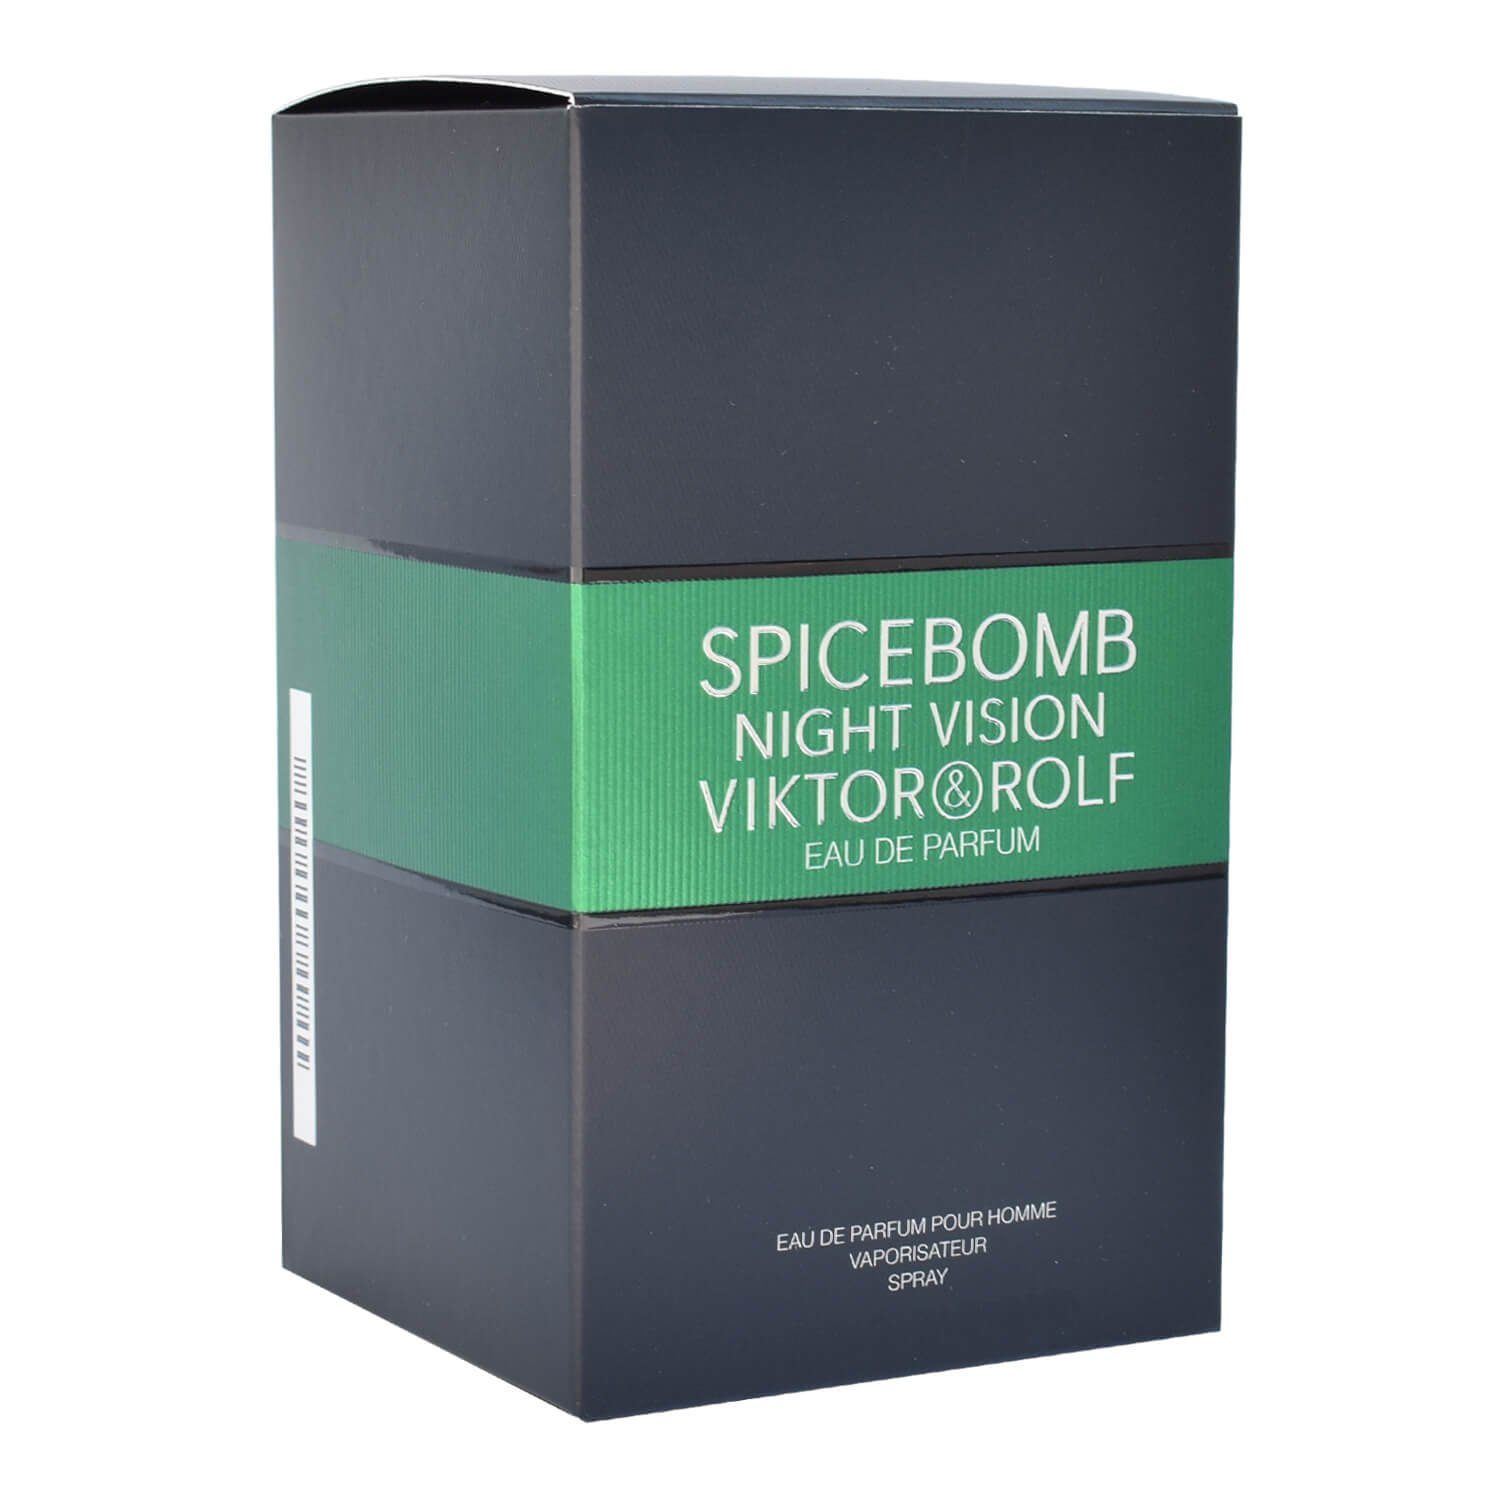 Viktor & Rolf Eau de Parfum Spicebomb ml 50 Night EDP Vision